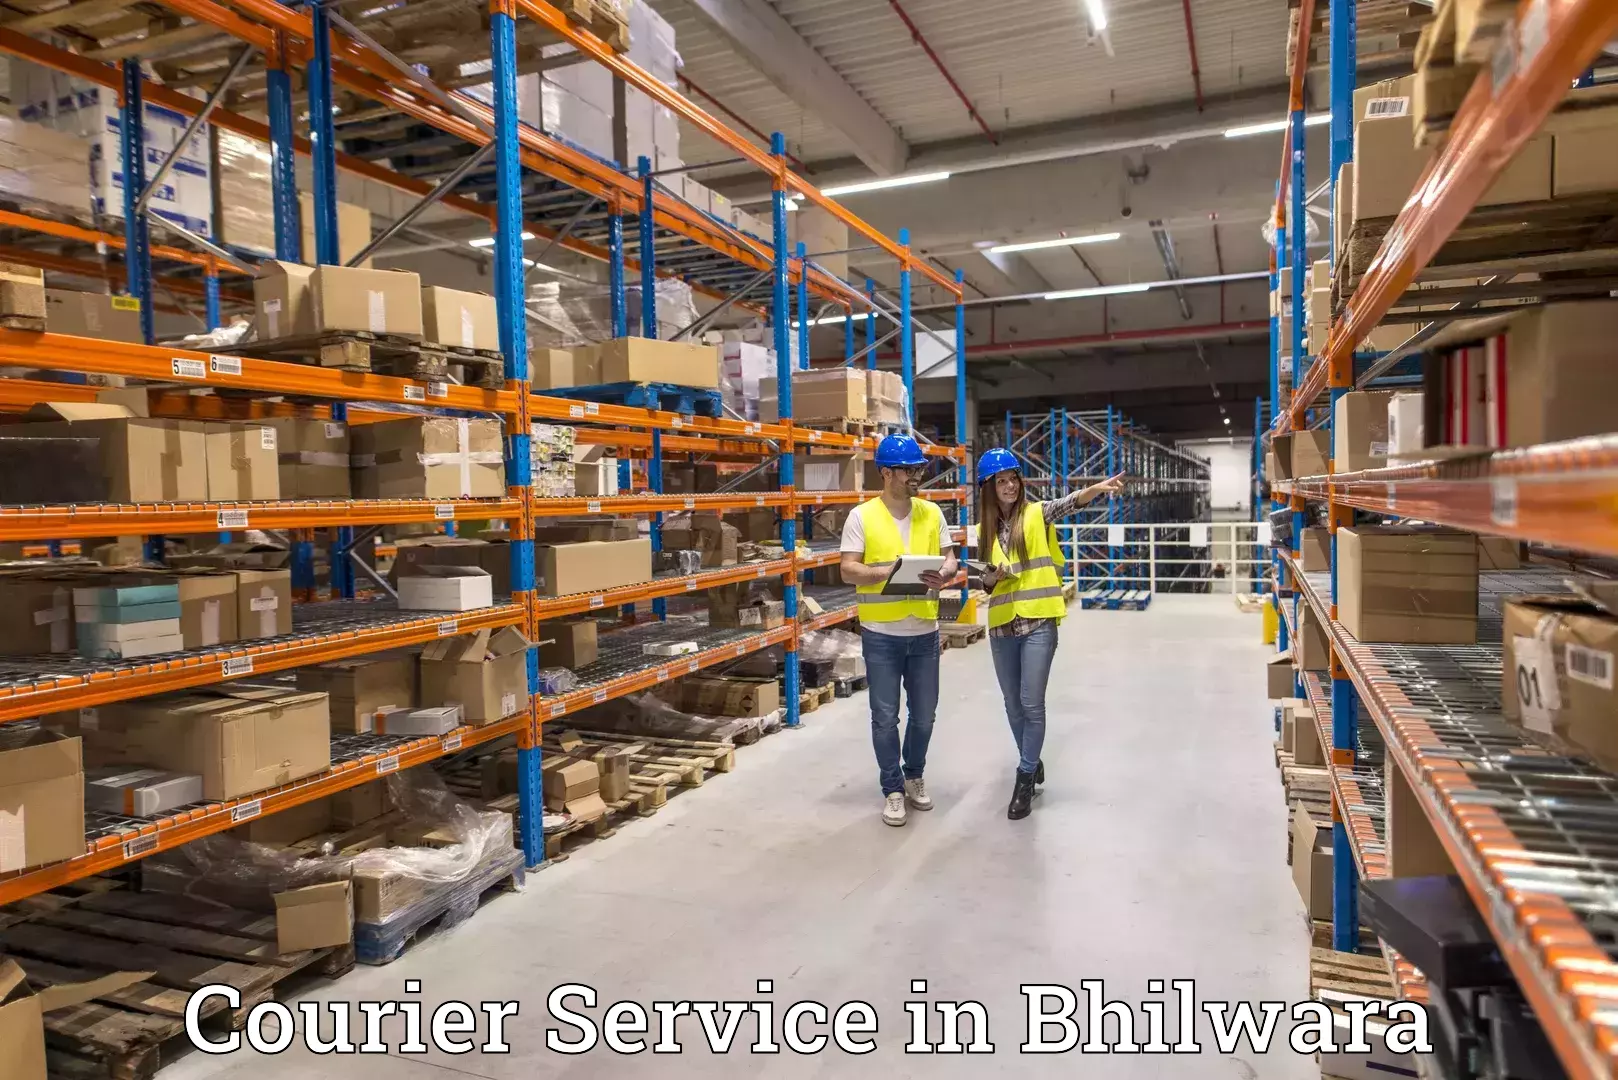 Logistics and distribution in Bhilwara